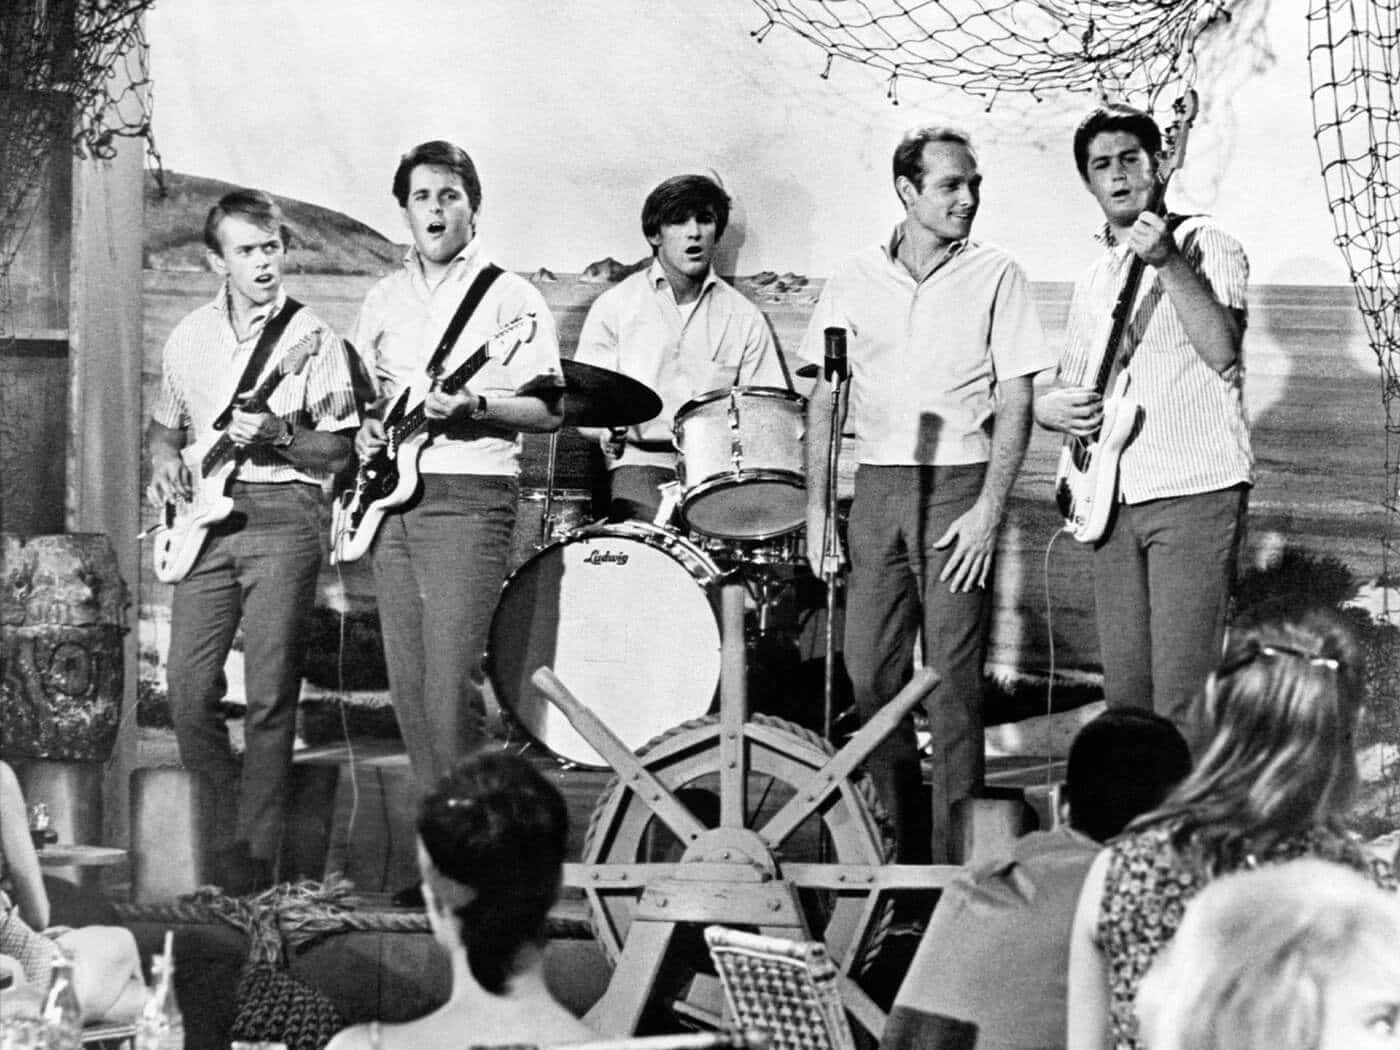 Beach Boys Synger Piger På Stranden 1965 Wallpaper